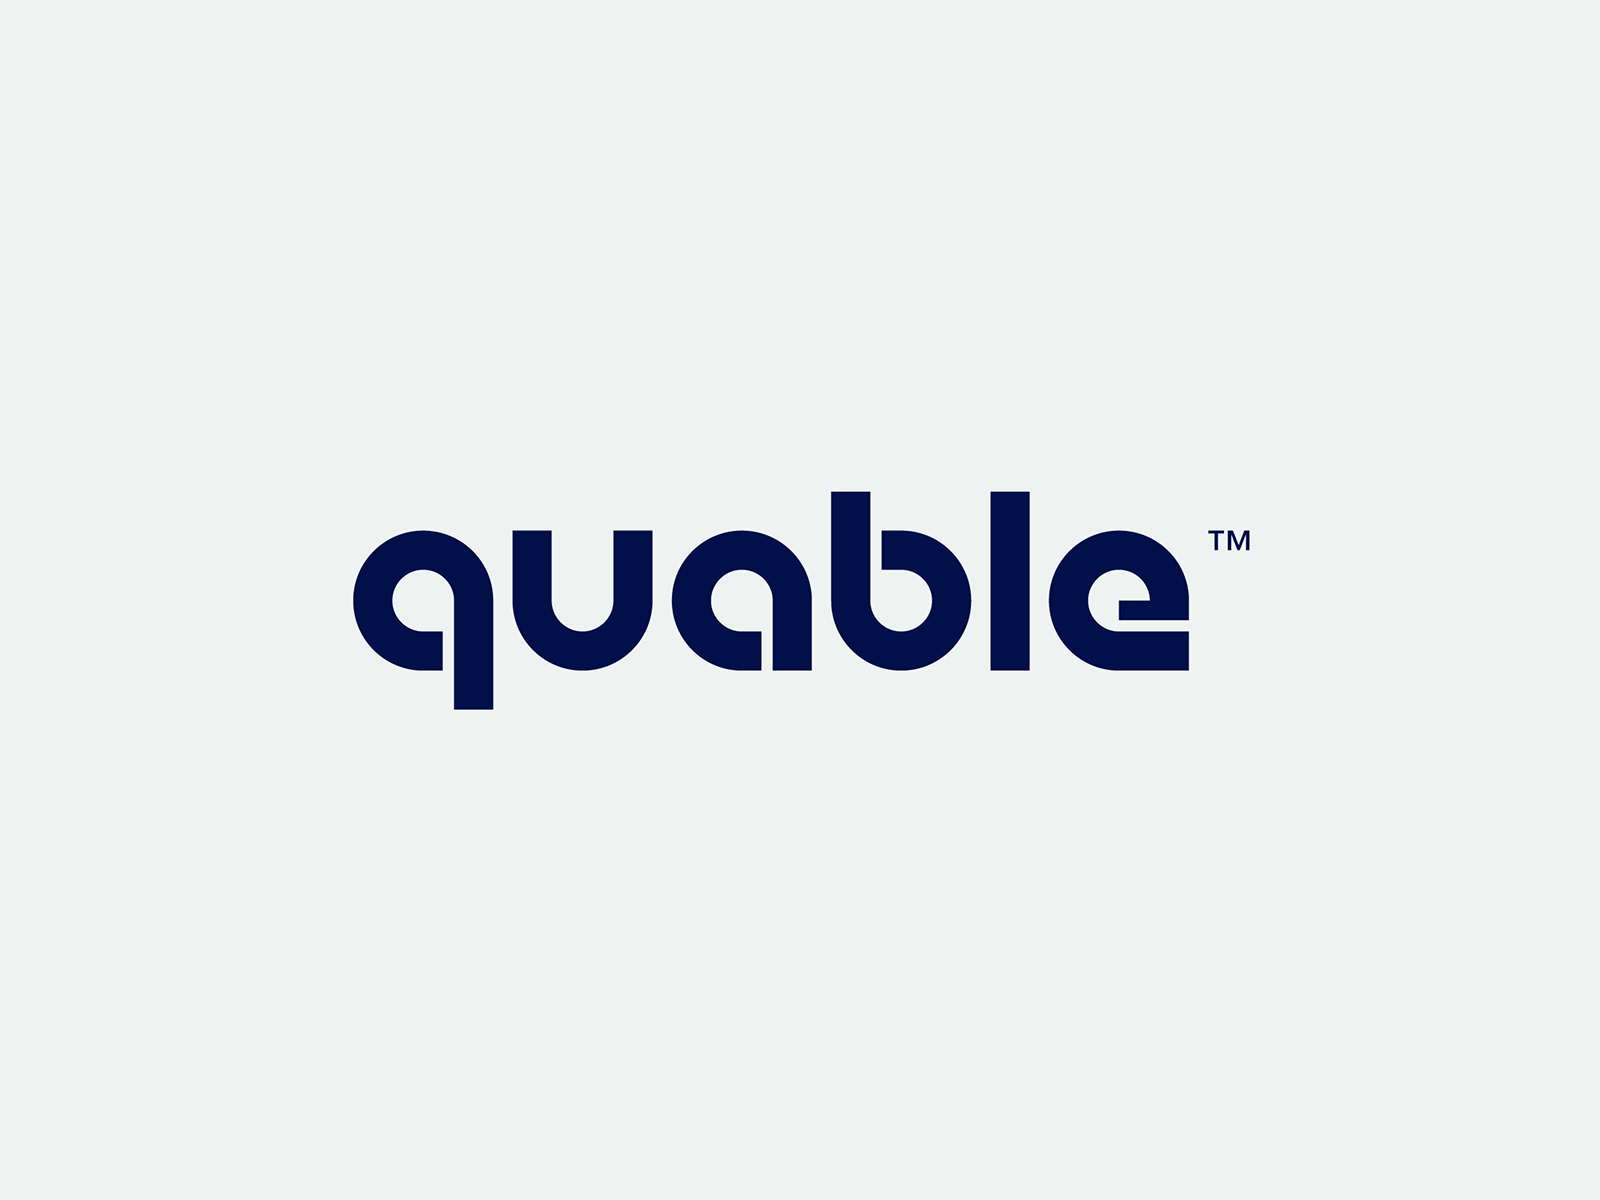 Quable types